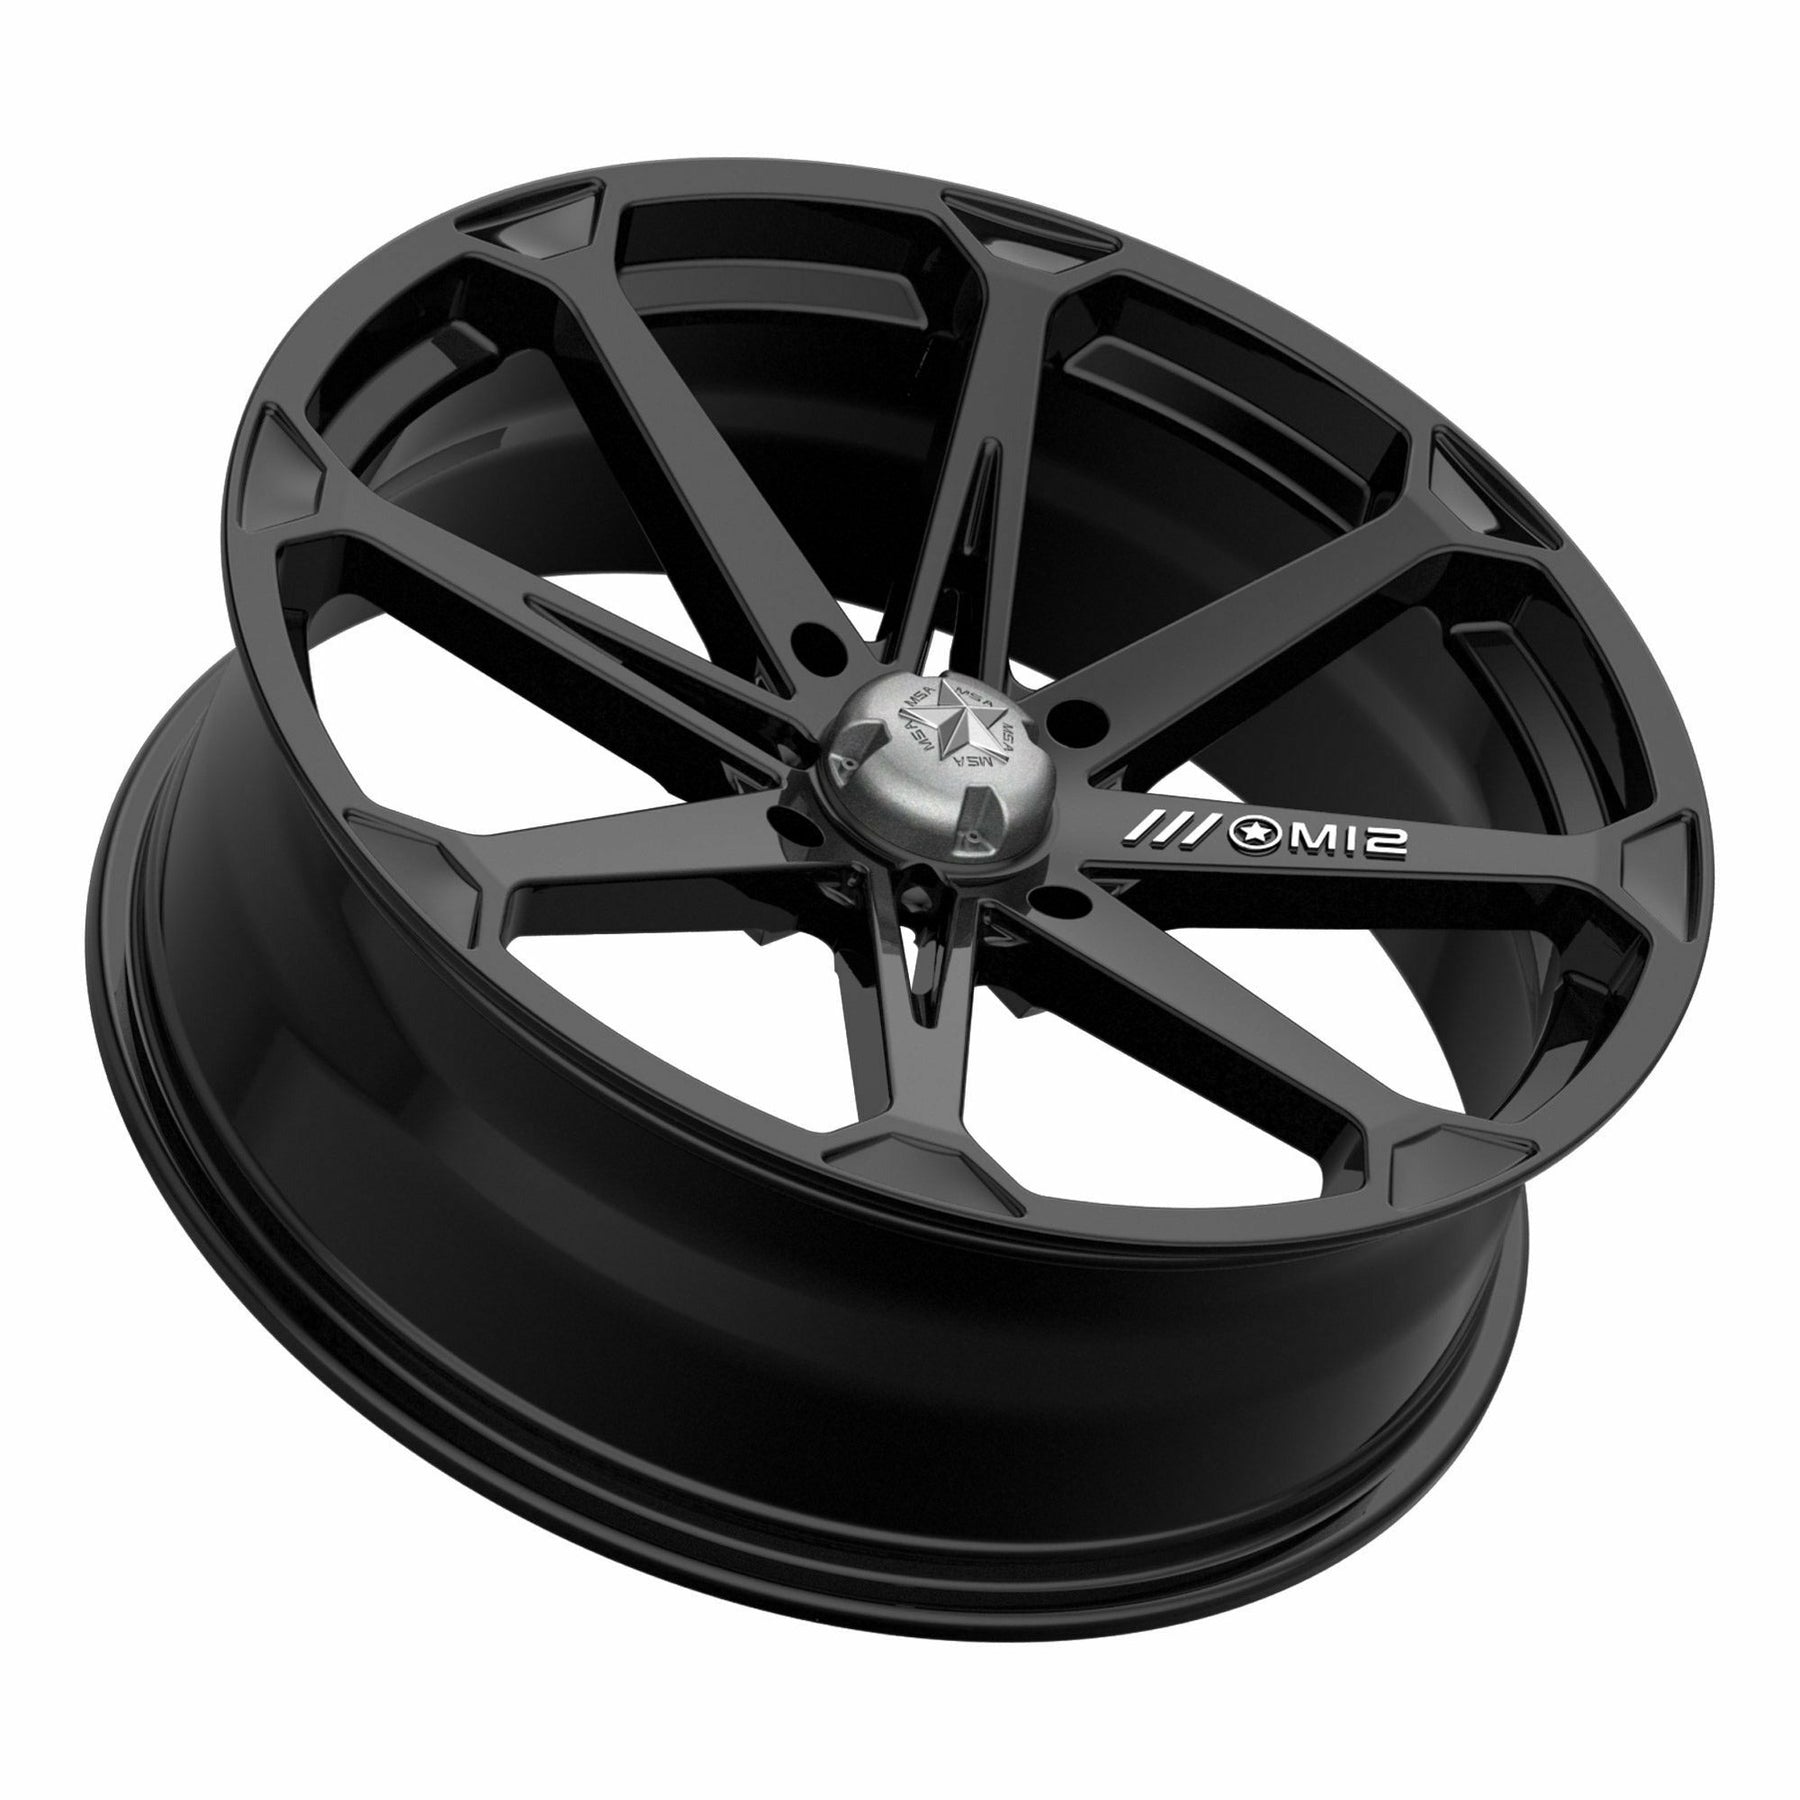 MSA Wheels M12 Diesel Wheel (Gloss Black)